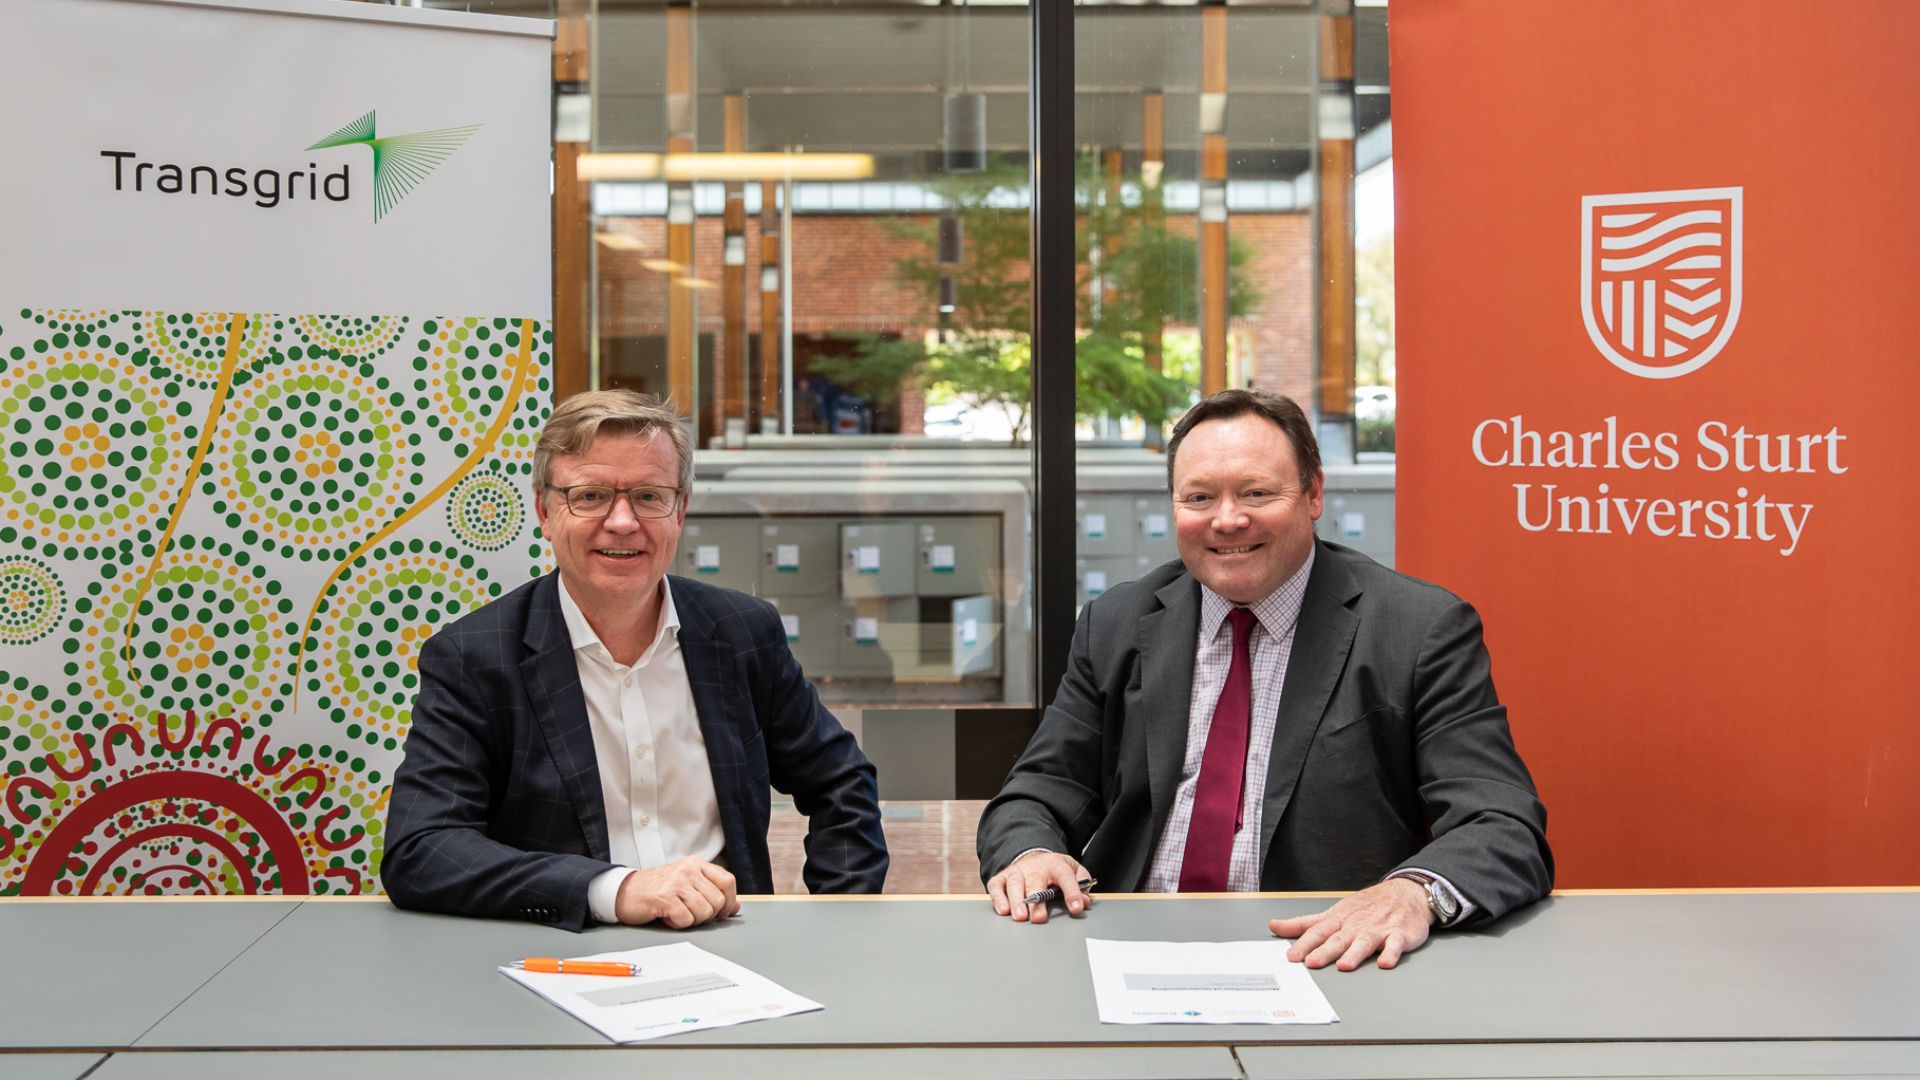 Charles Sturt-Transgrid partnership to bring new energy to Riverina 